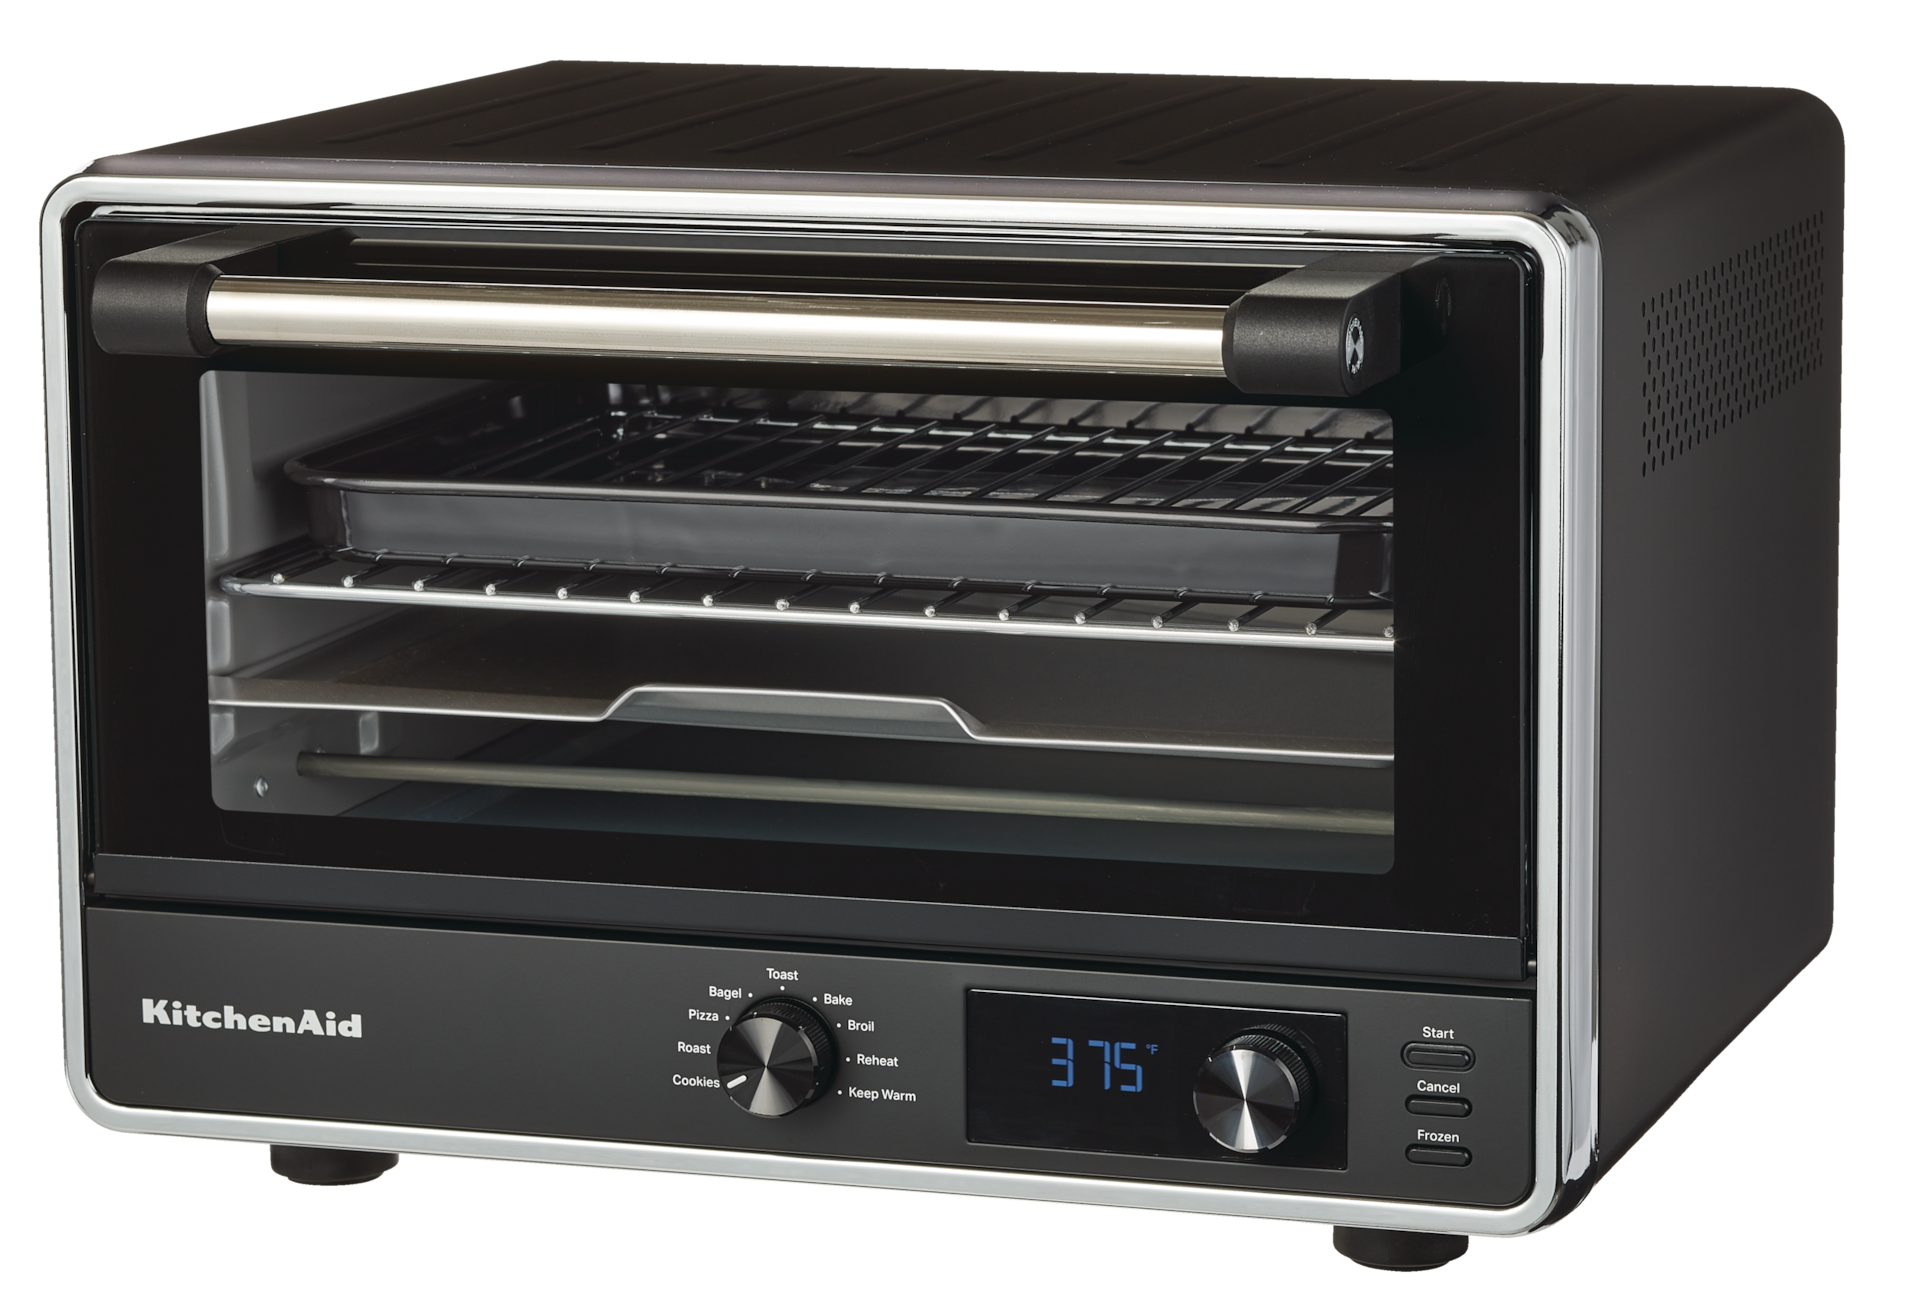 Kitchenaid Digital Toaster Oven W 9, Kitchenaid Digital Countertop Toaster Oven